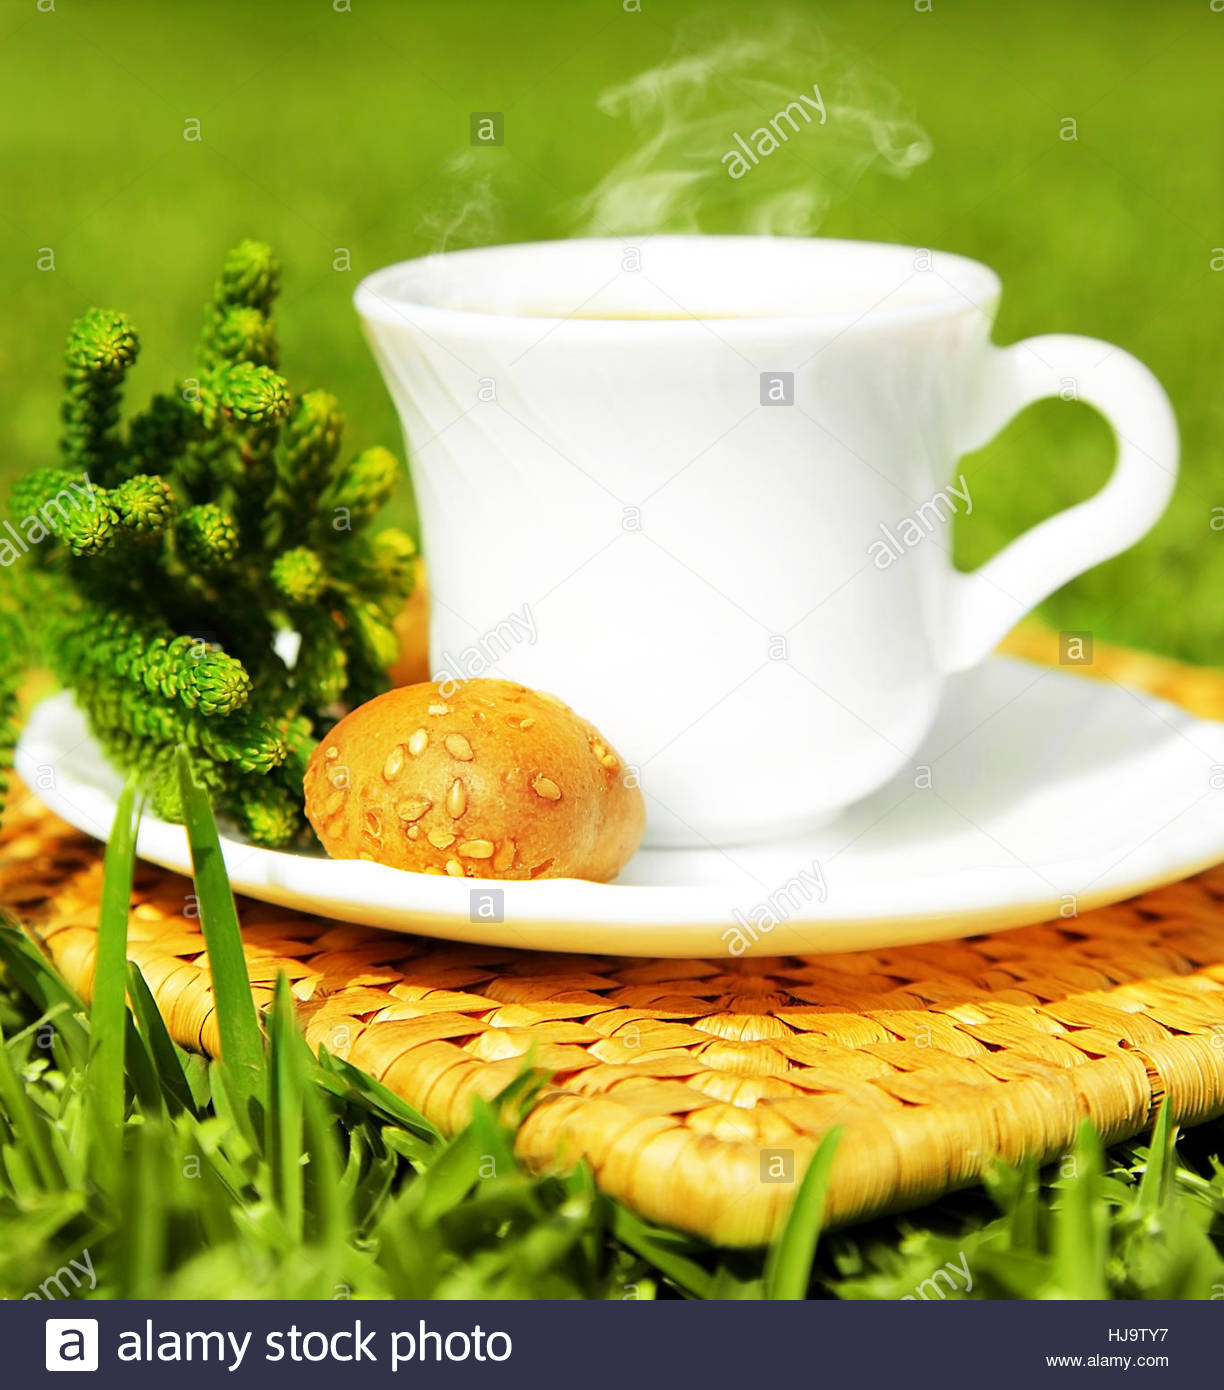 tea-beverage-morning-meadow-grass-lawn-green-coffee-healthy-tomorrow-HJ9TY7.jpg